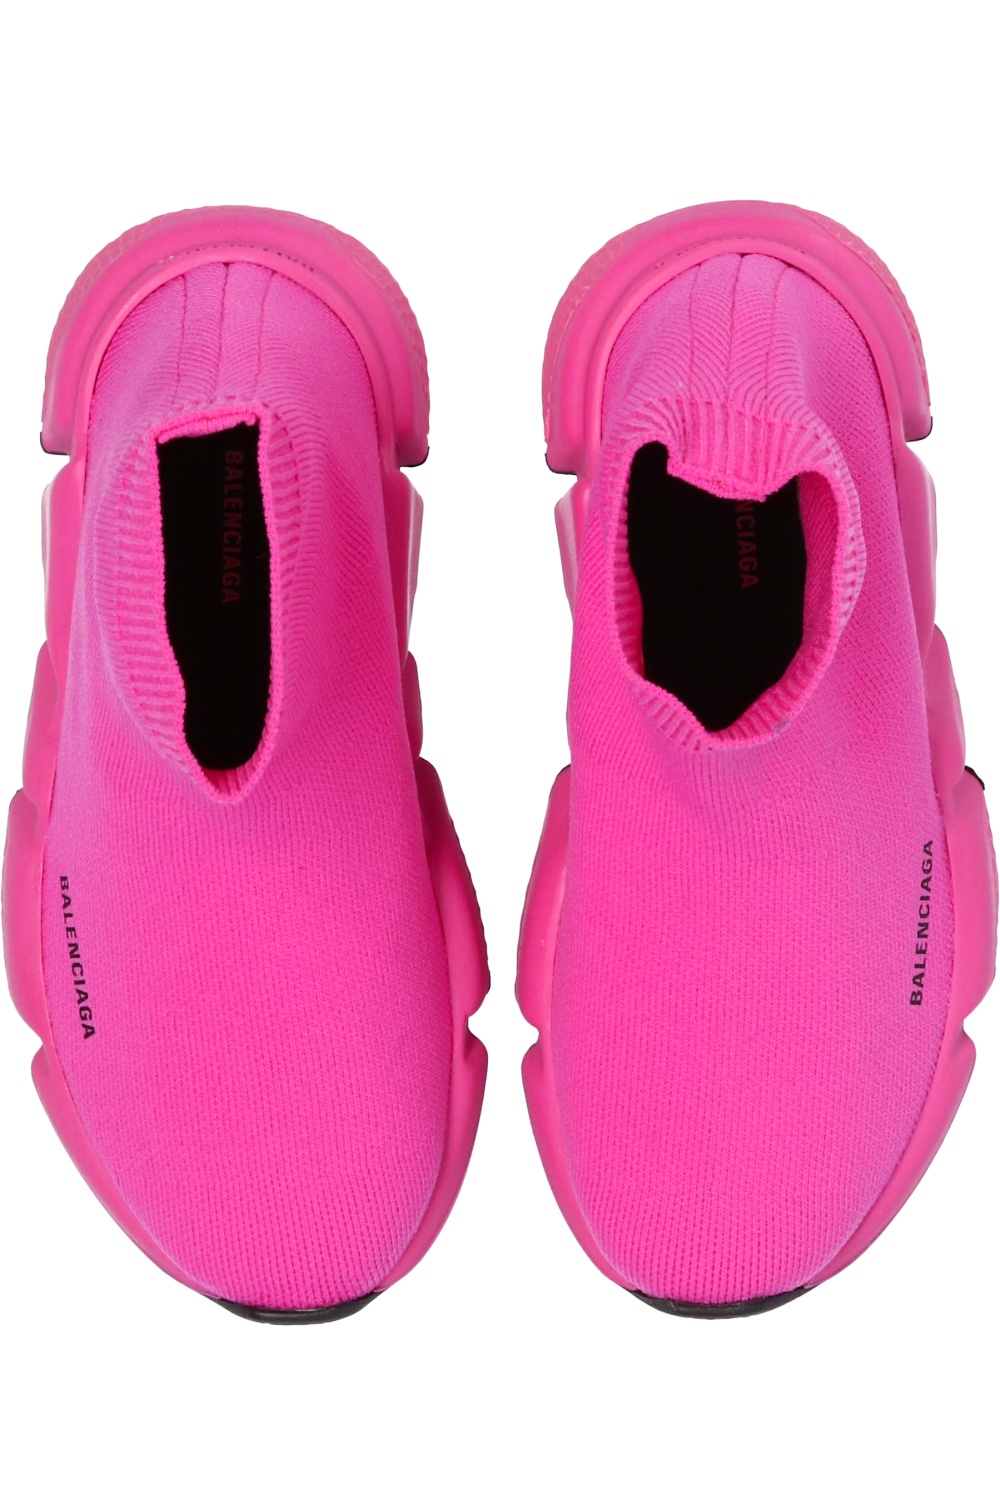 Balenciaga Kids 'Speed' sock sneakers | 39) | IetpShops | Kids's Kids (25 - New Herren Lifestyle 574 Retro MS574DA Schwarz Top Modell Neu